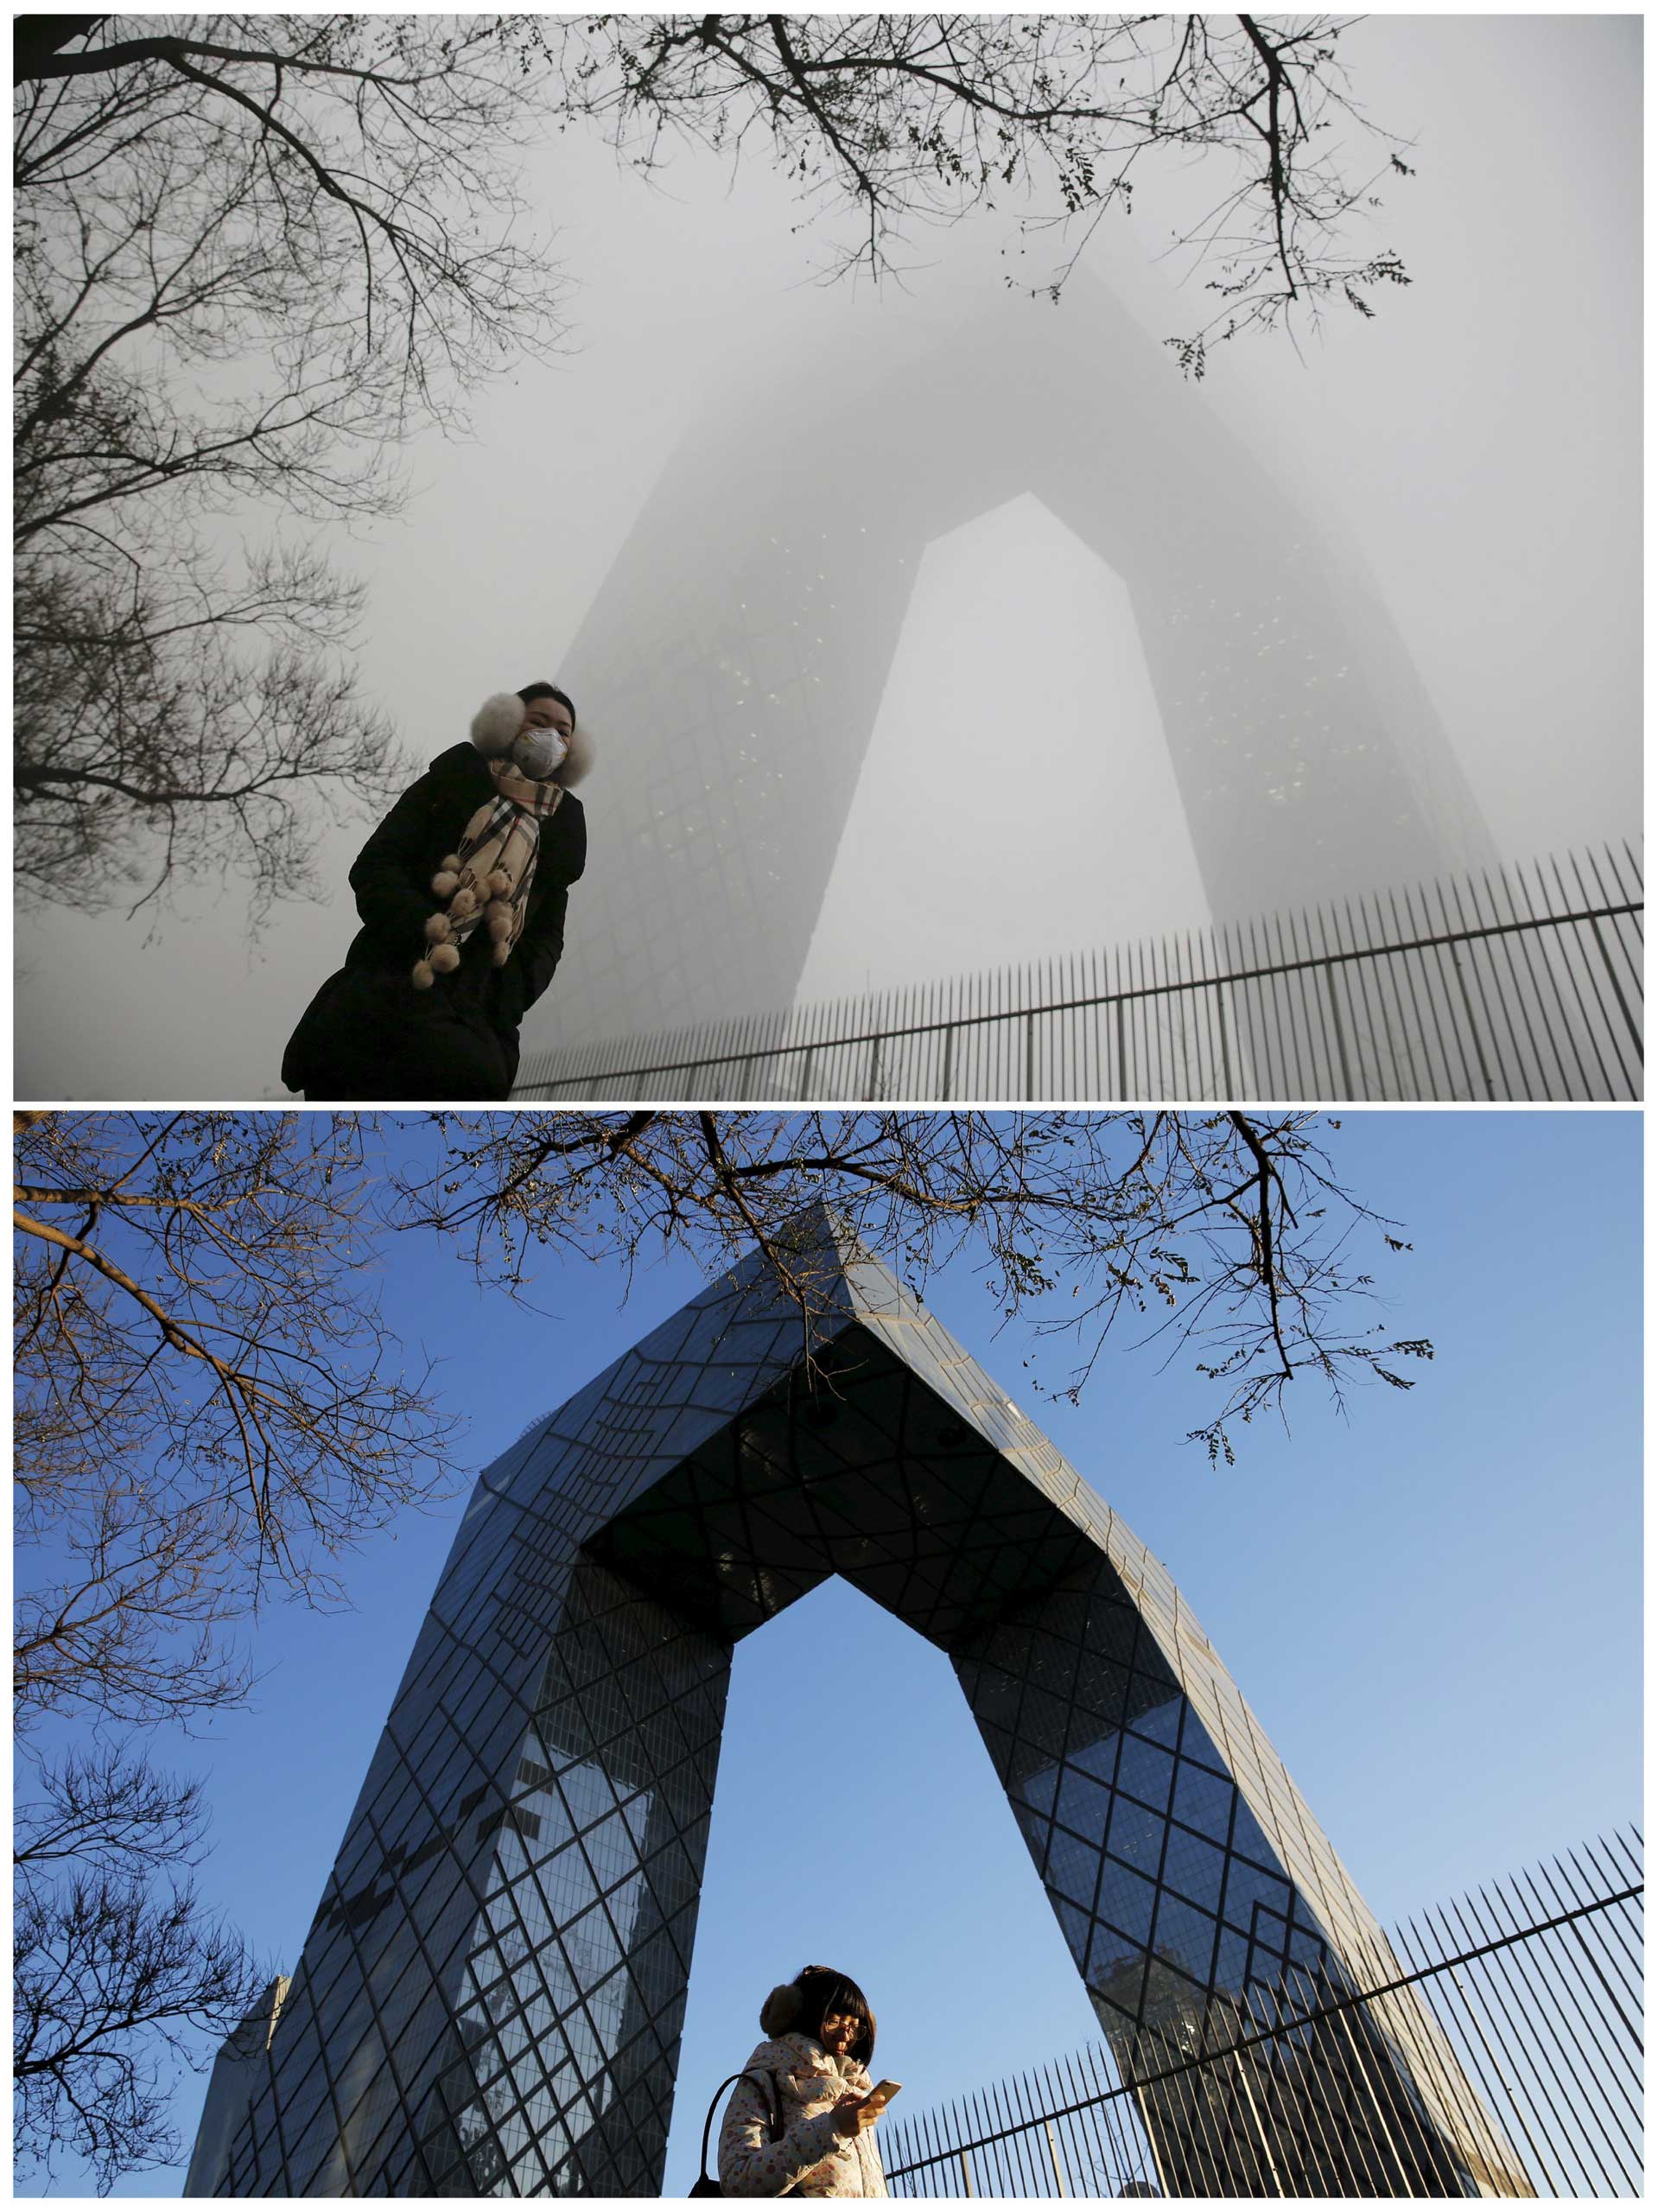 Beijing smog before after